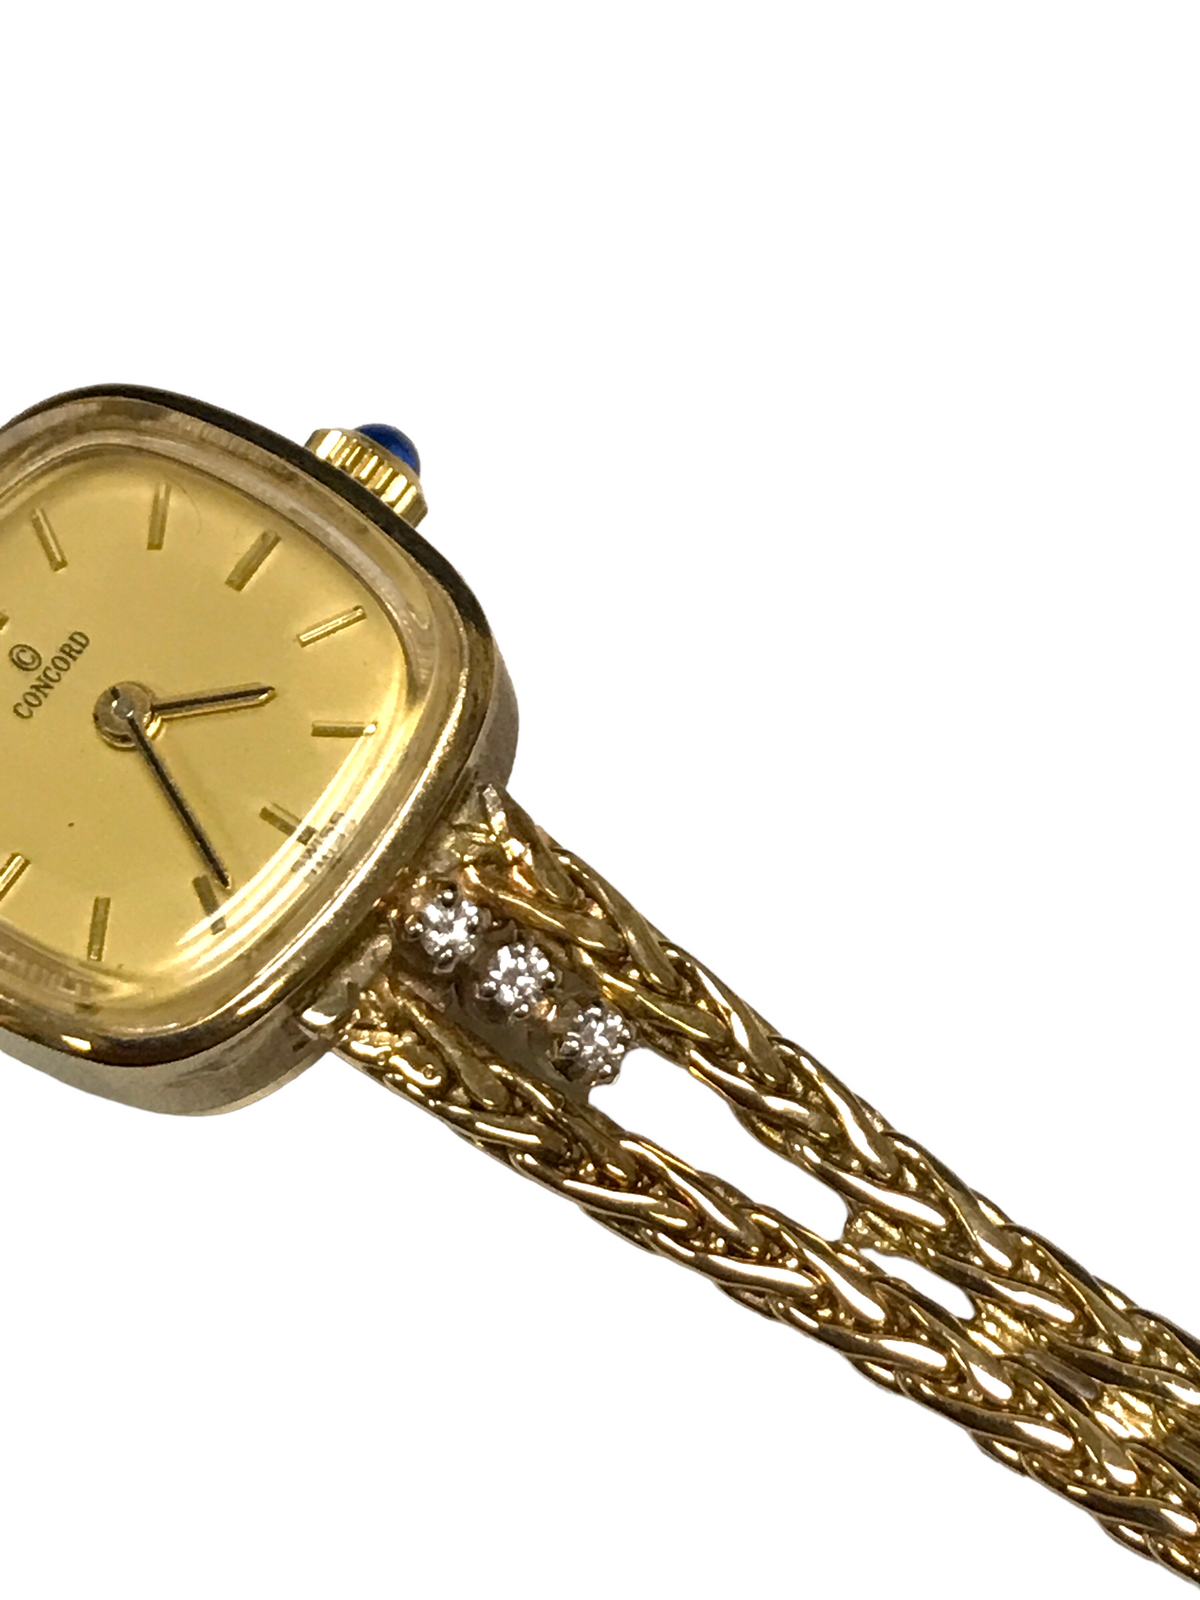 Vintage Concord 14k Yellow Gold Diamond Ladies Watch